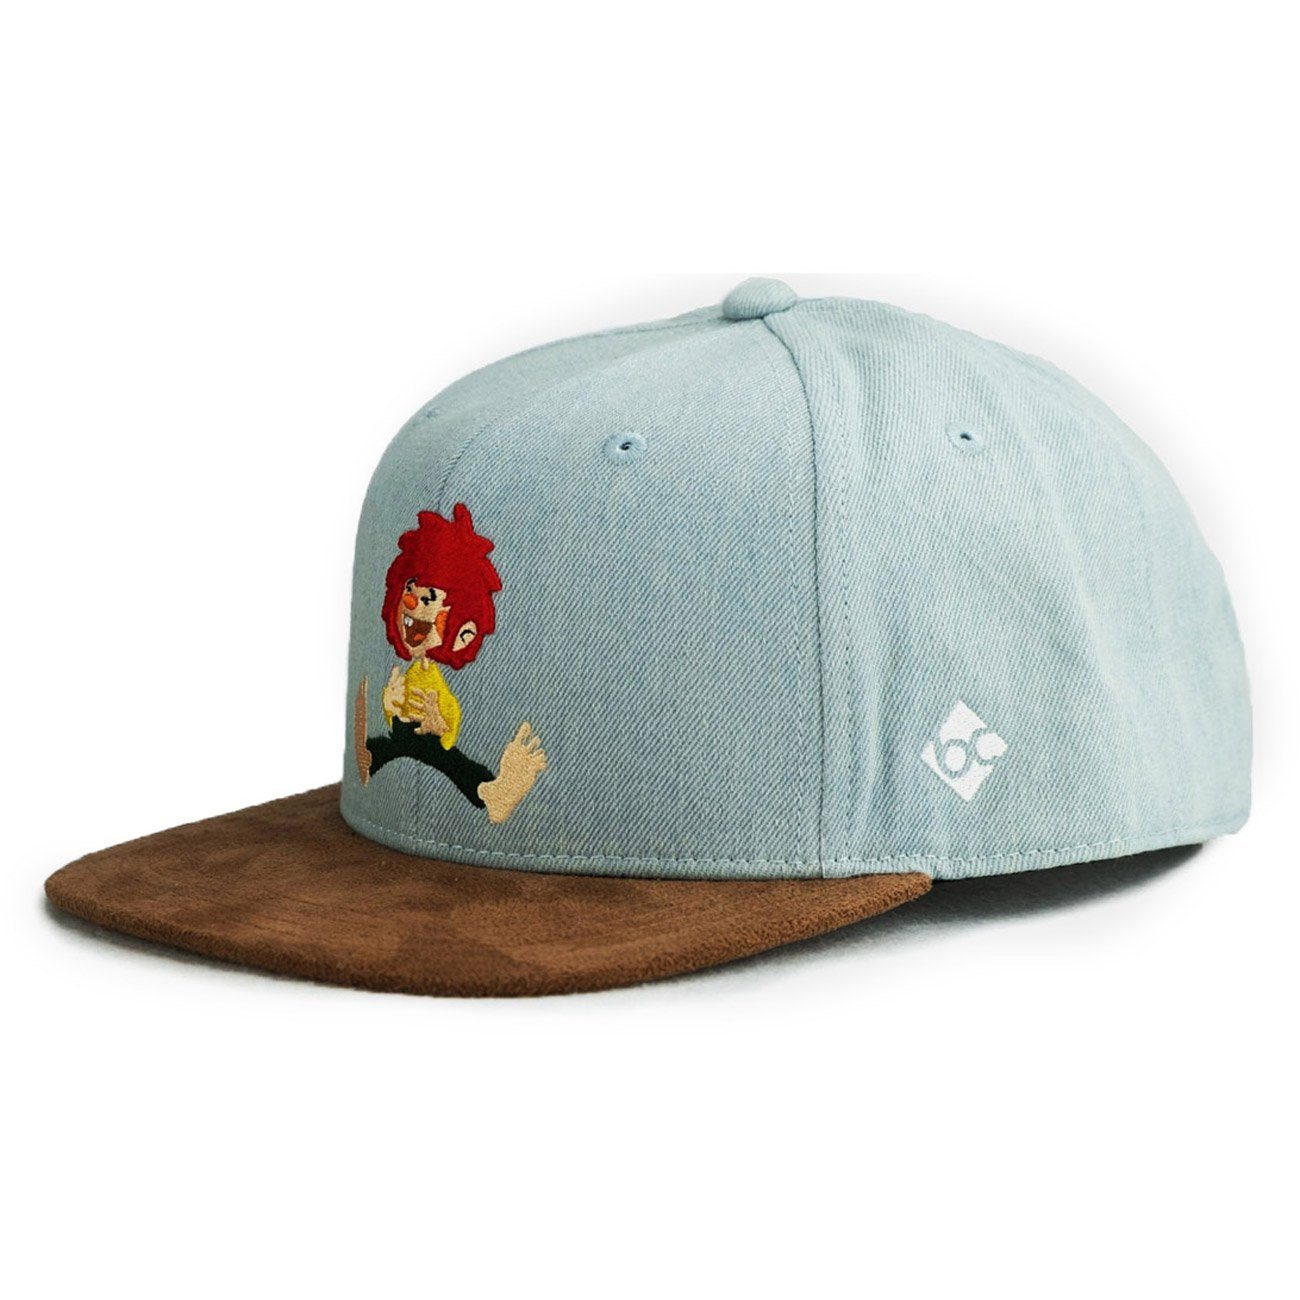 Cap Baseball Bavarian Pumuckl Caps